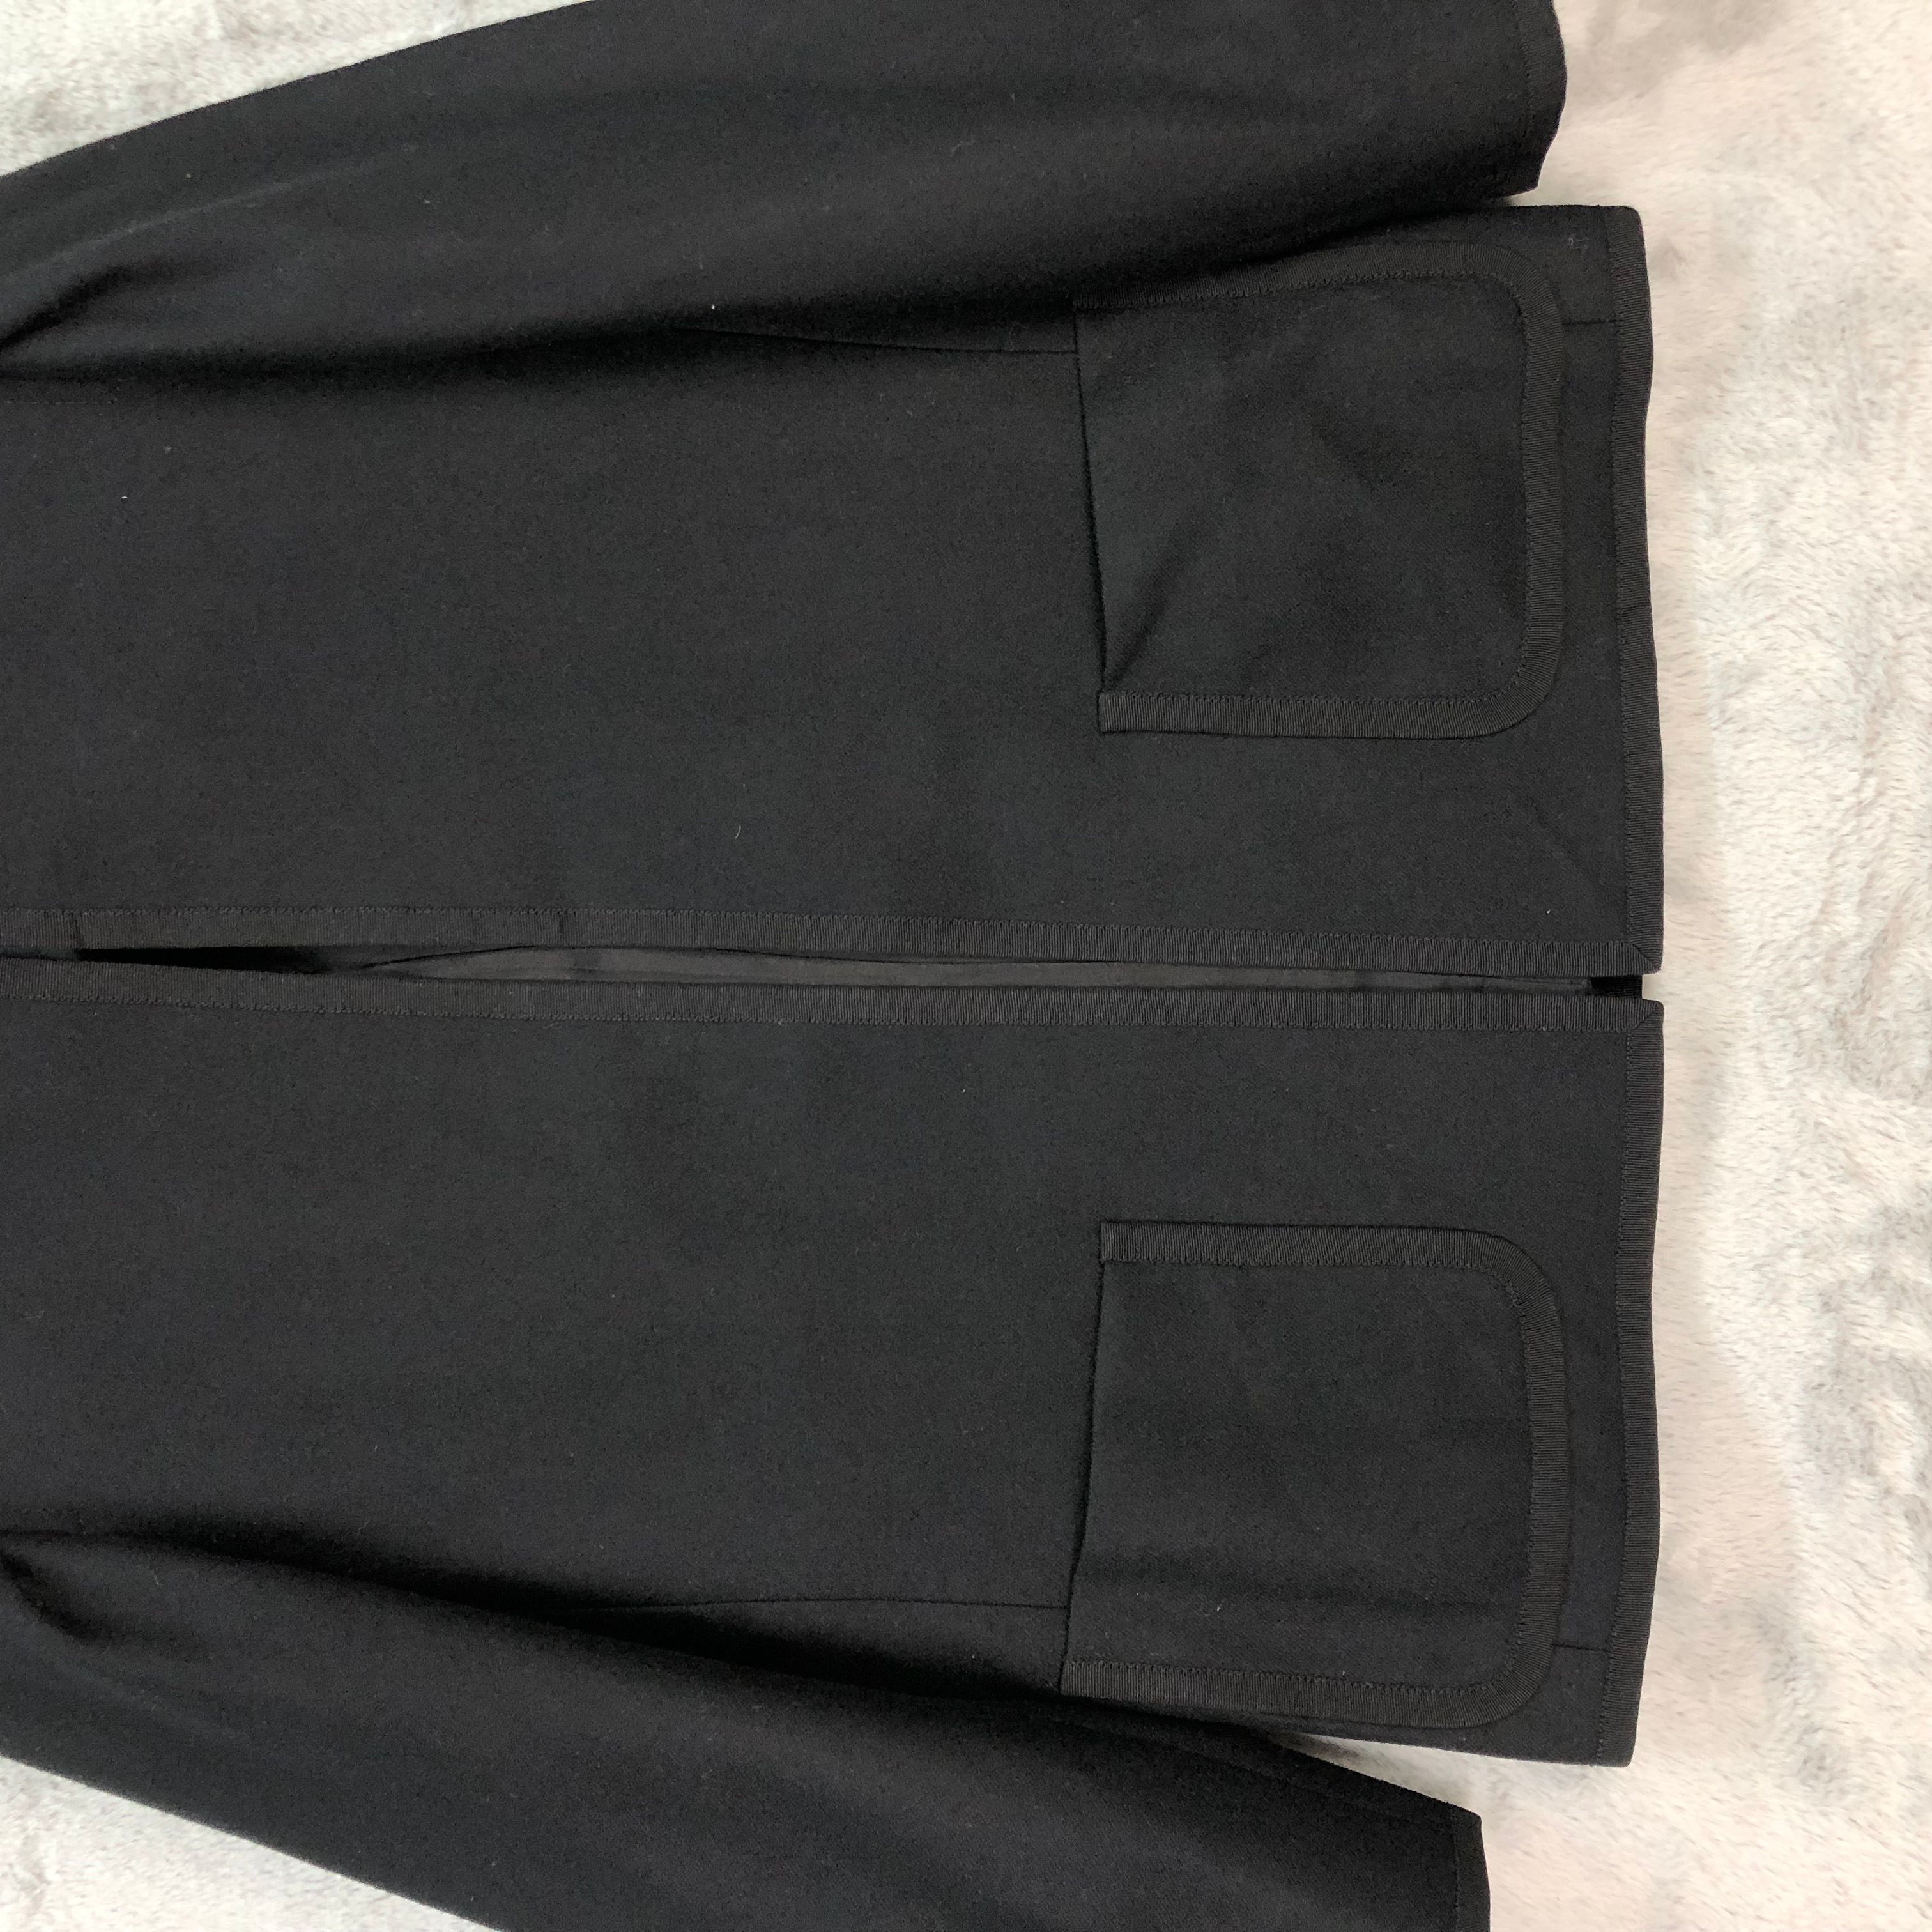 Givenchy Hi-Formal Buttonless Jacket / Cardigan #1037-42 - 3